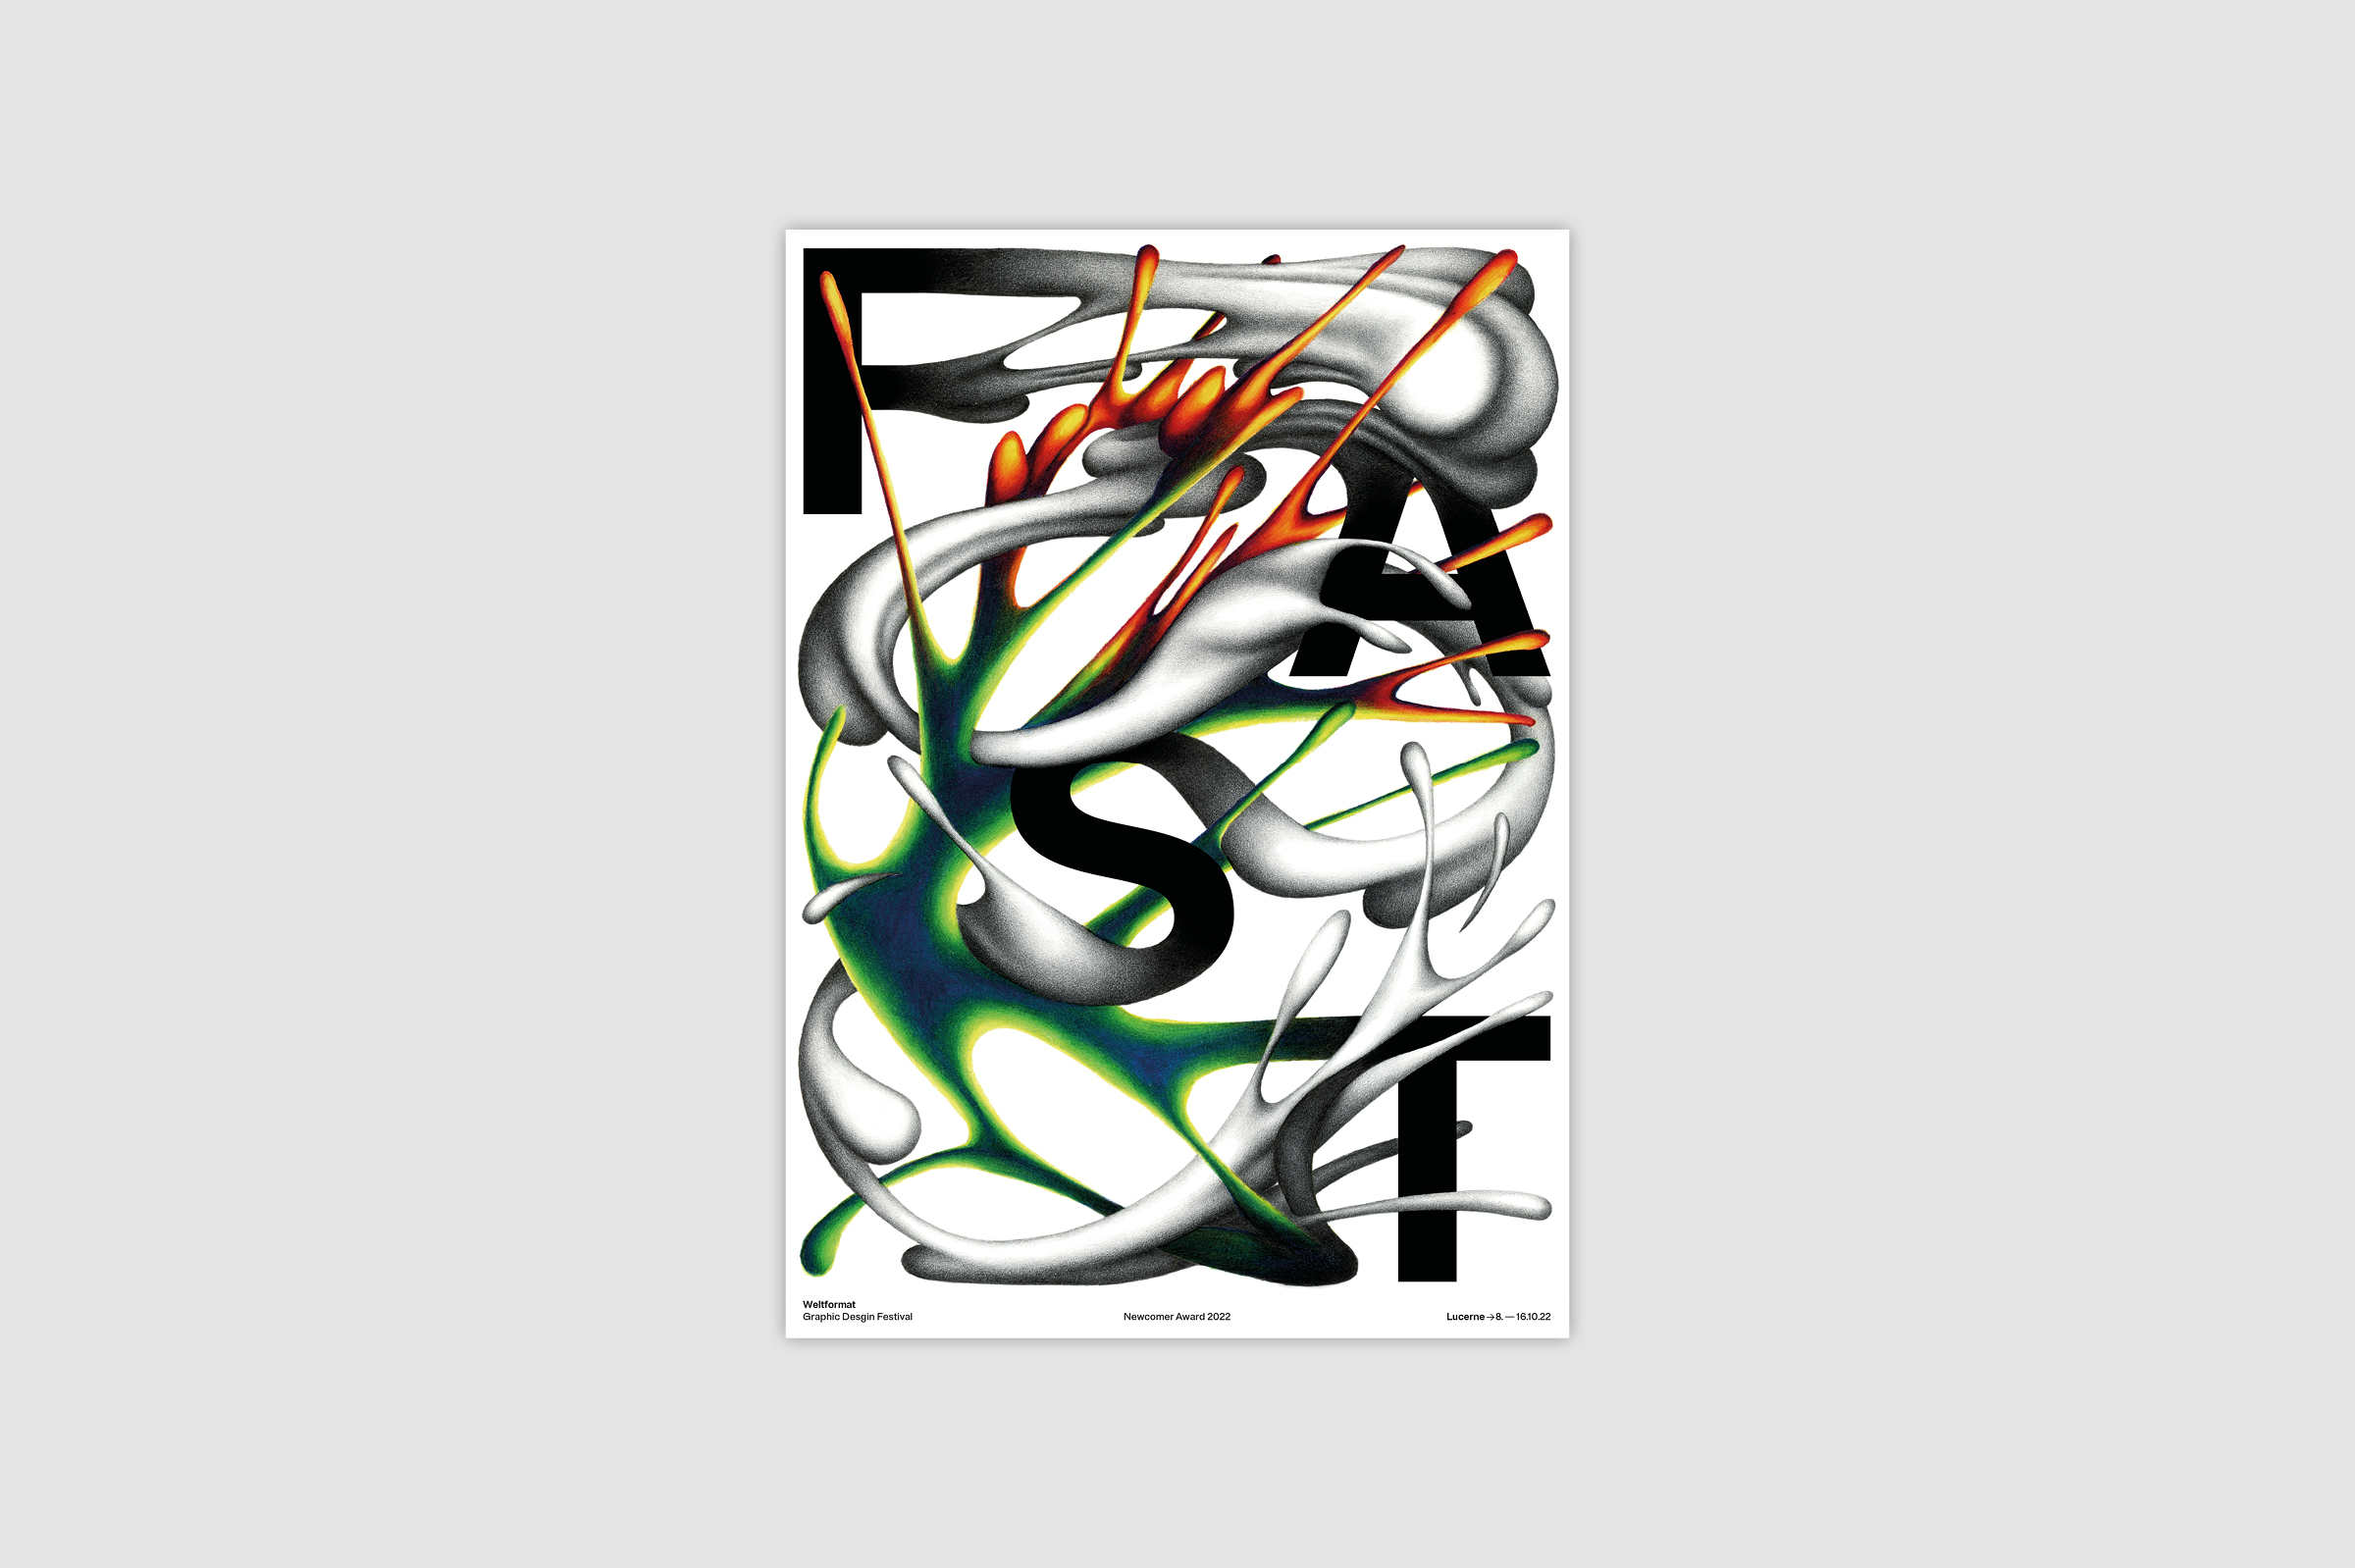 Weltformat Newcomer Award 2022, "Speed", Poster by ©Adrien jacquemet graphic designer